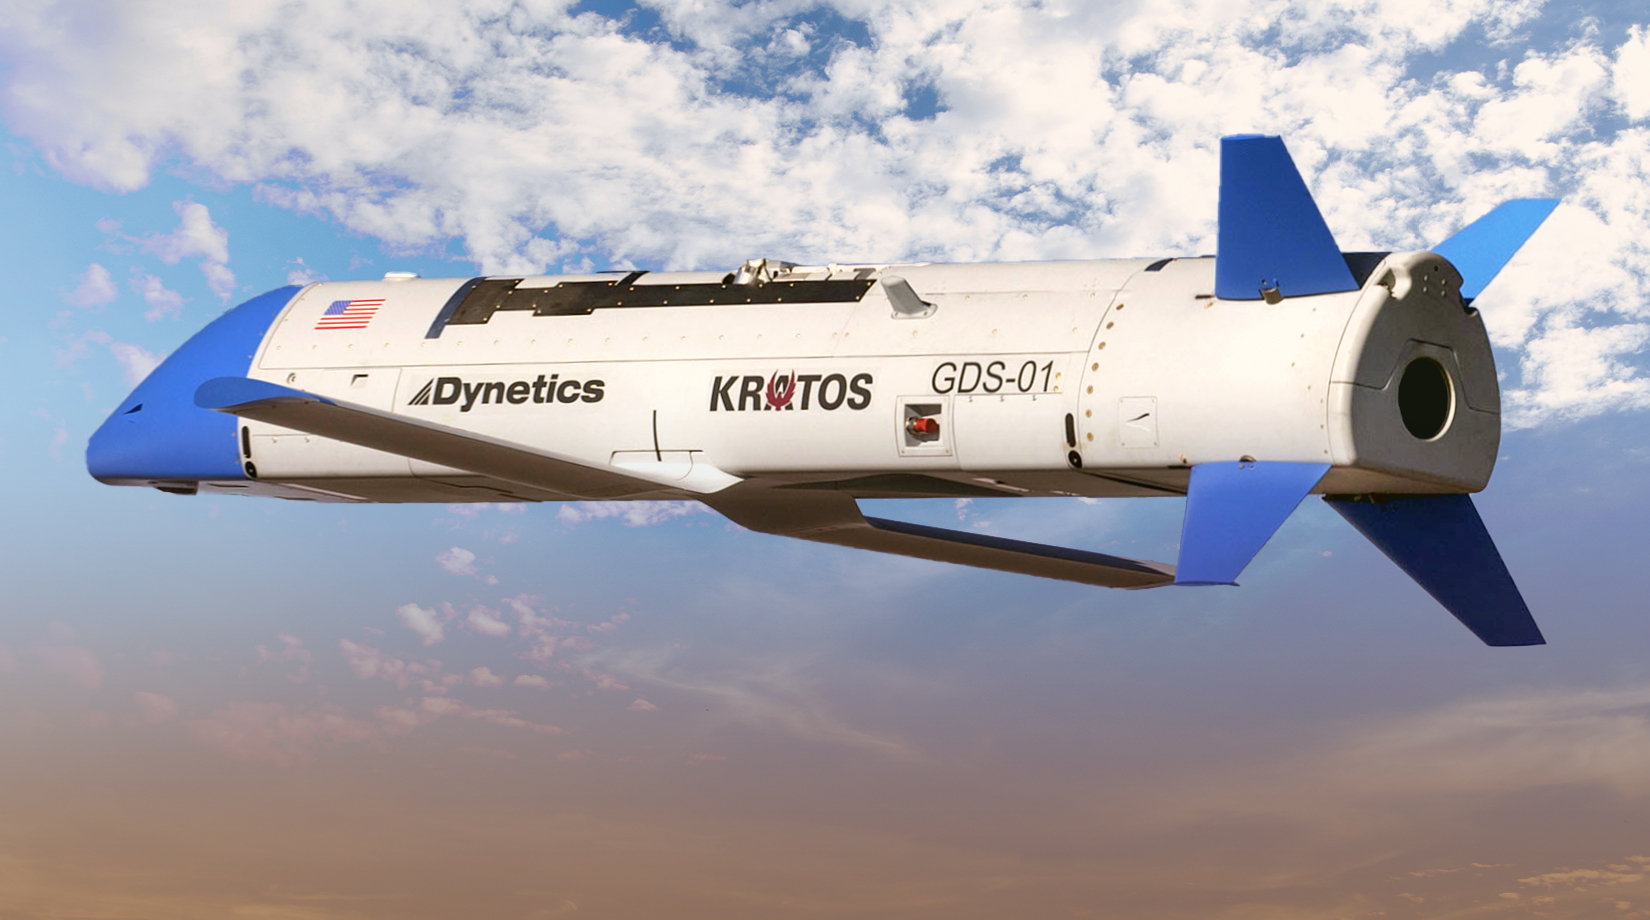 Dynetics' X-61A Gremlins air vehicle